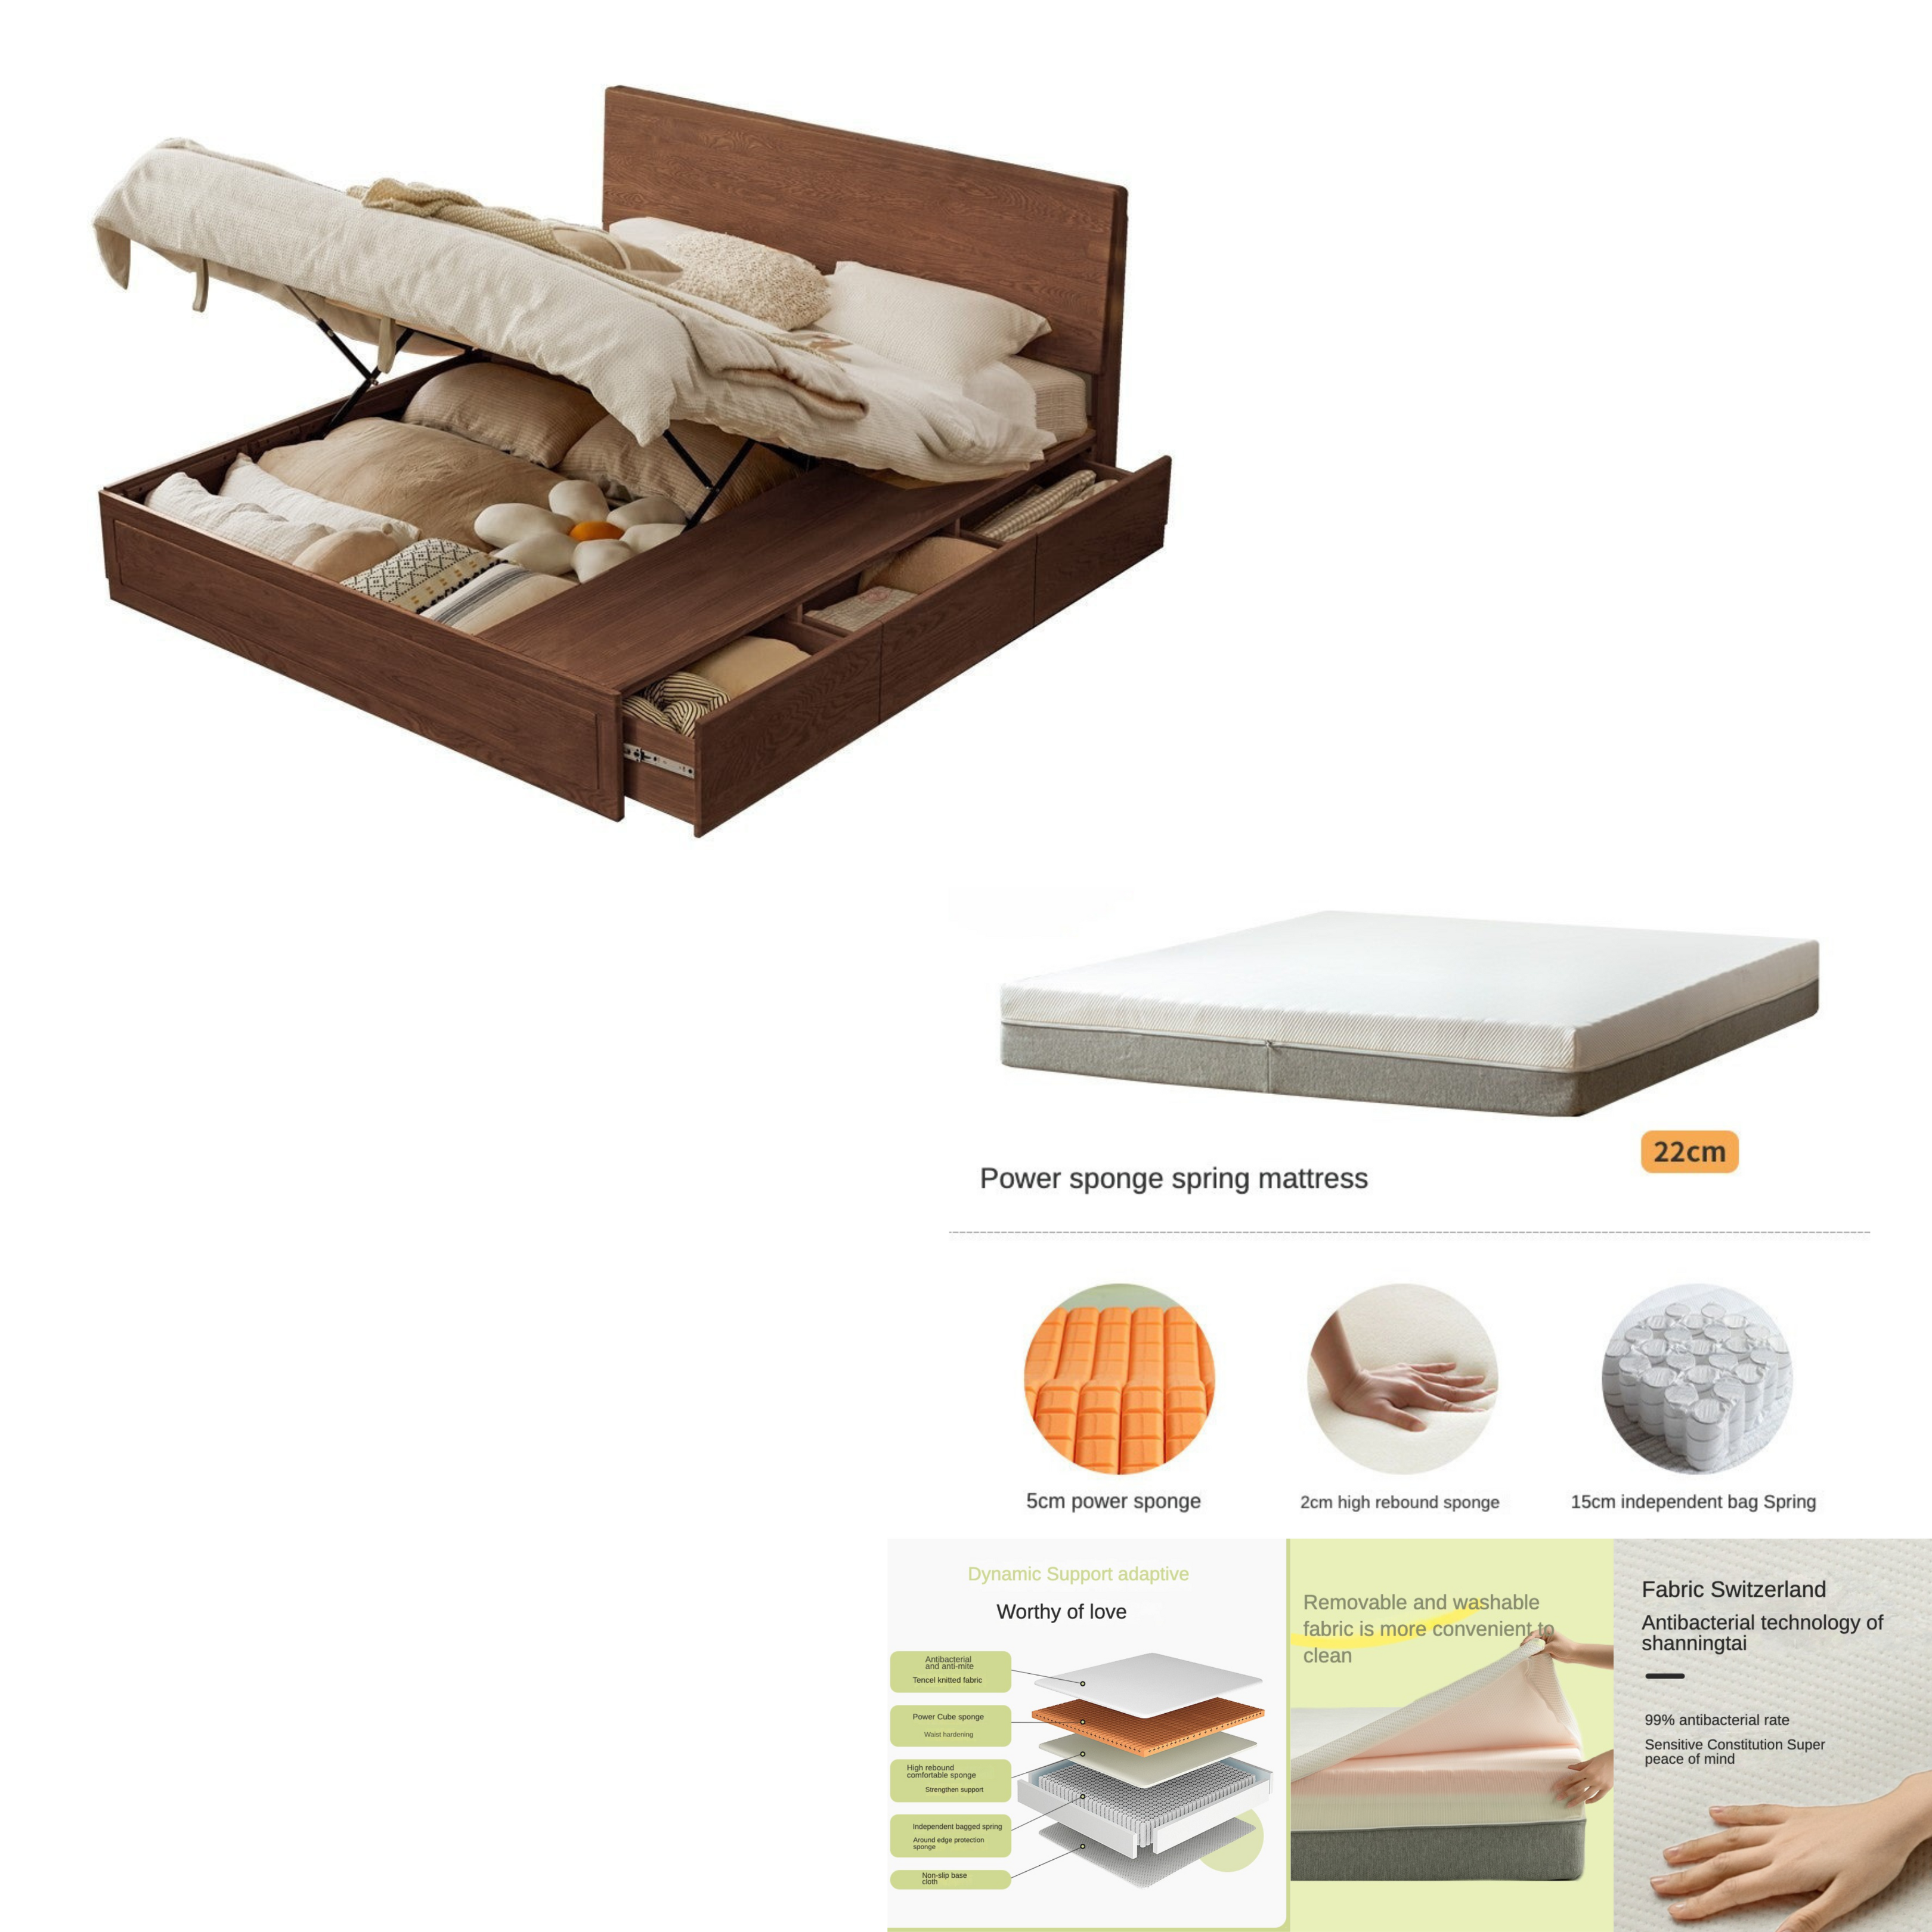 Ash, Oak Solid Wood Box Bed Modern"